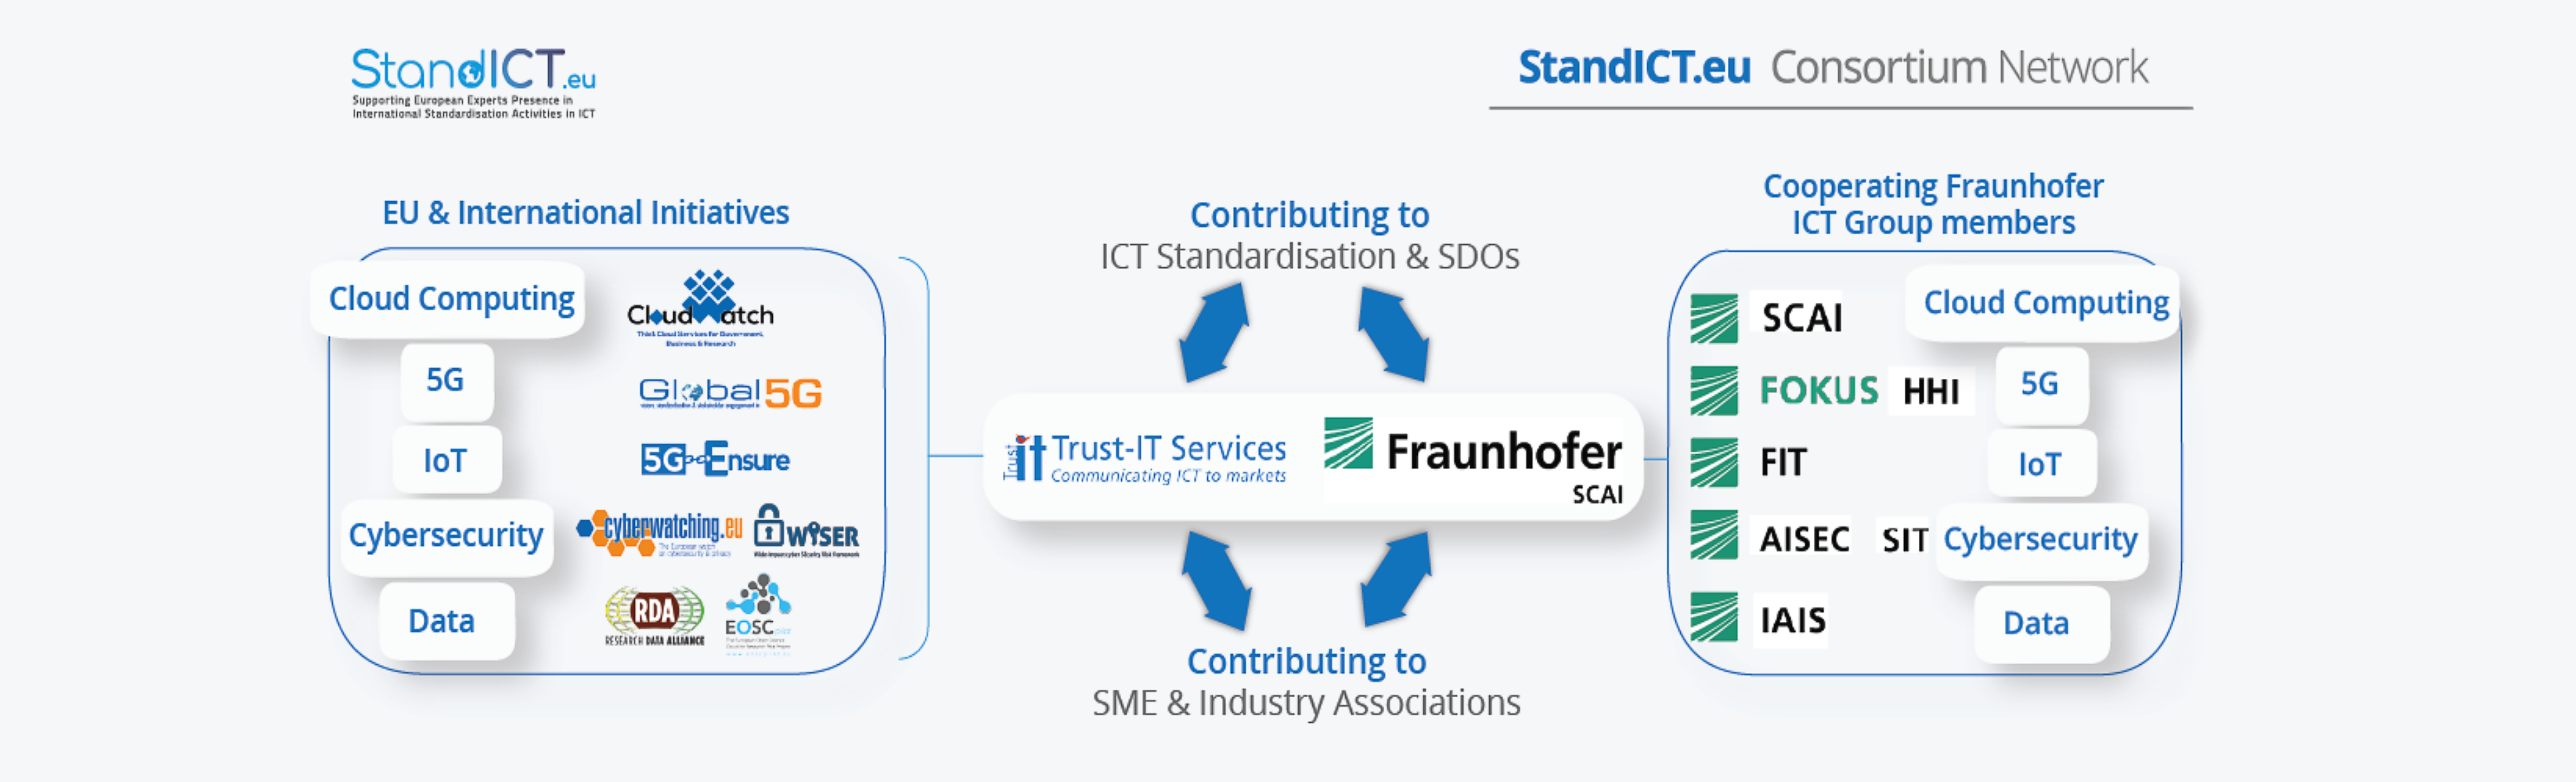 The StandICT.eu Consortium Network